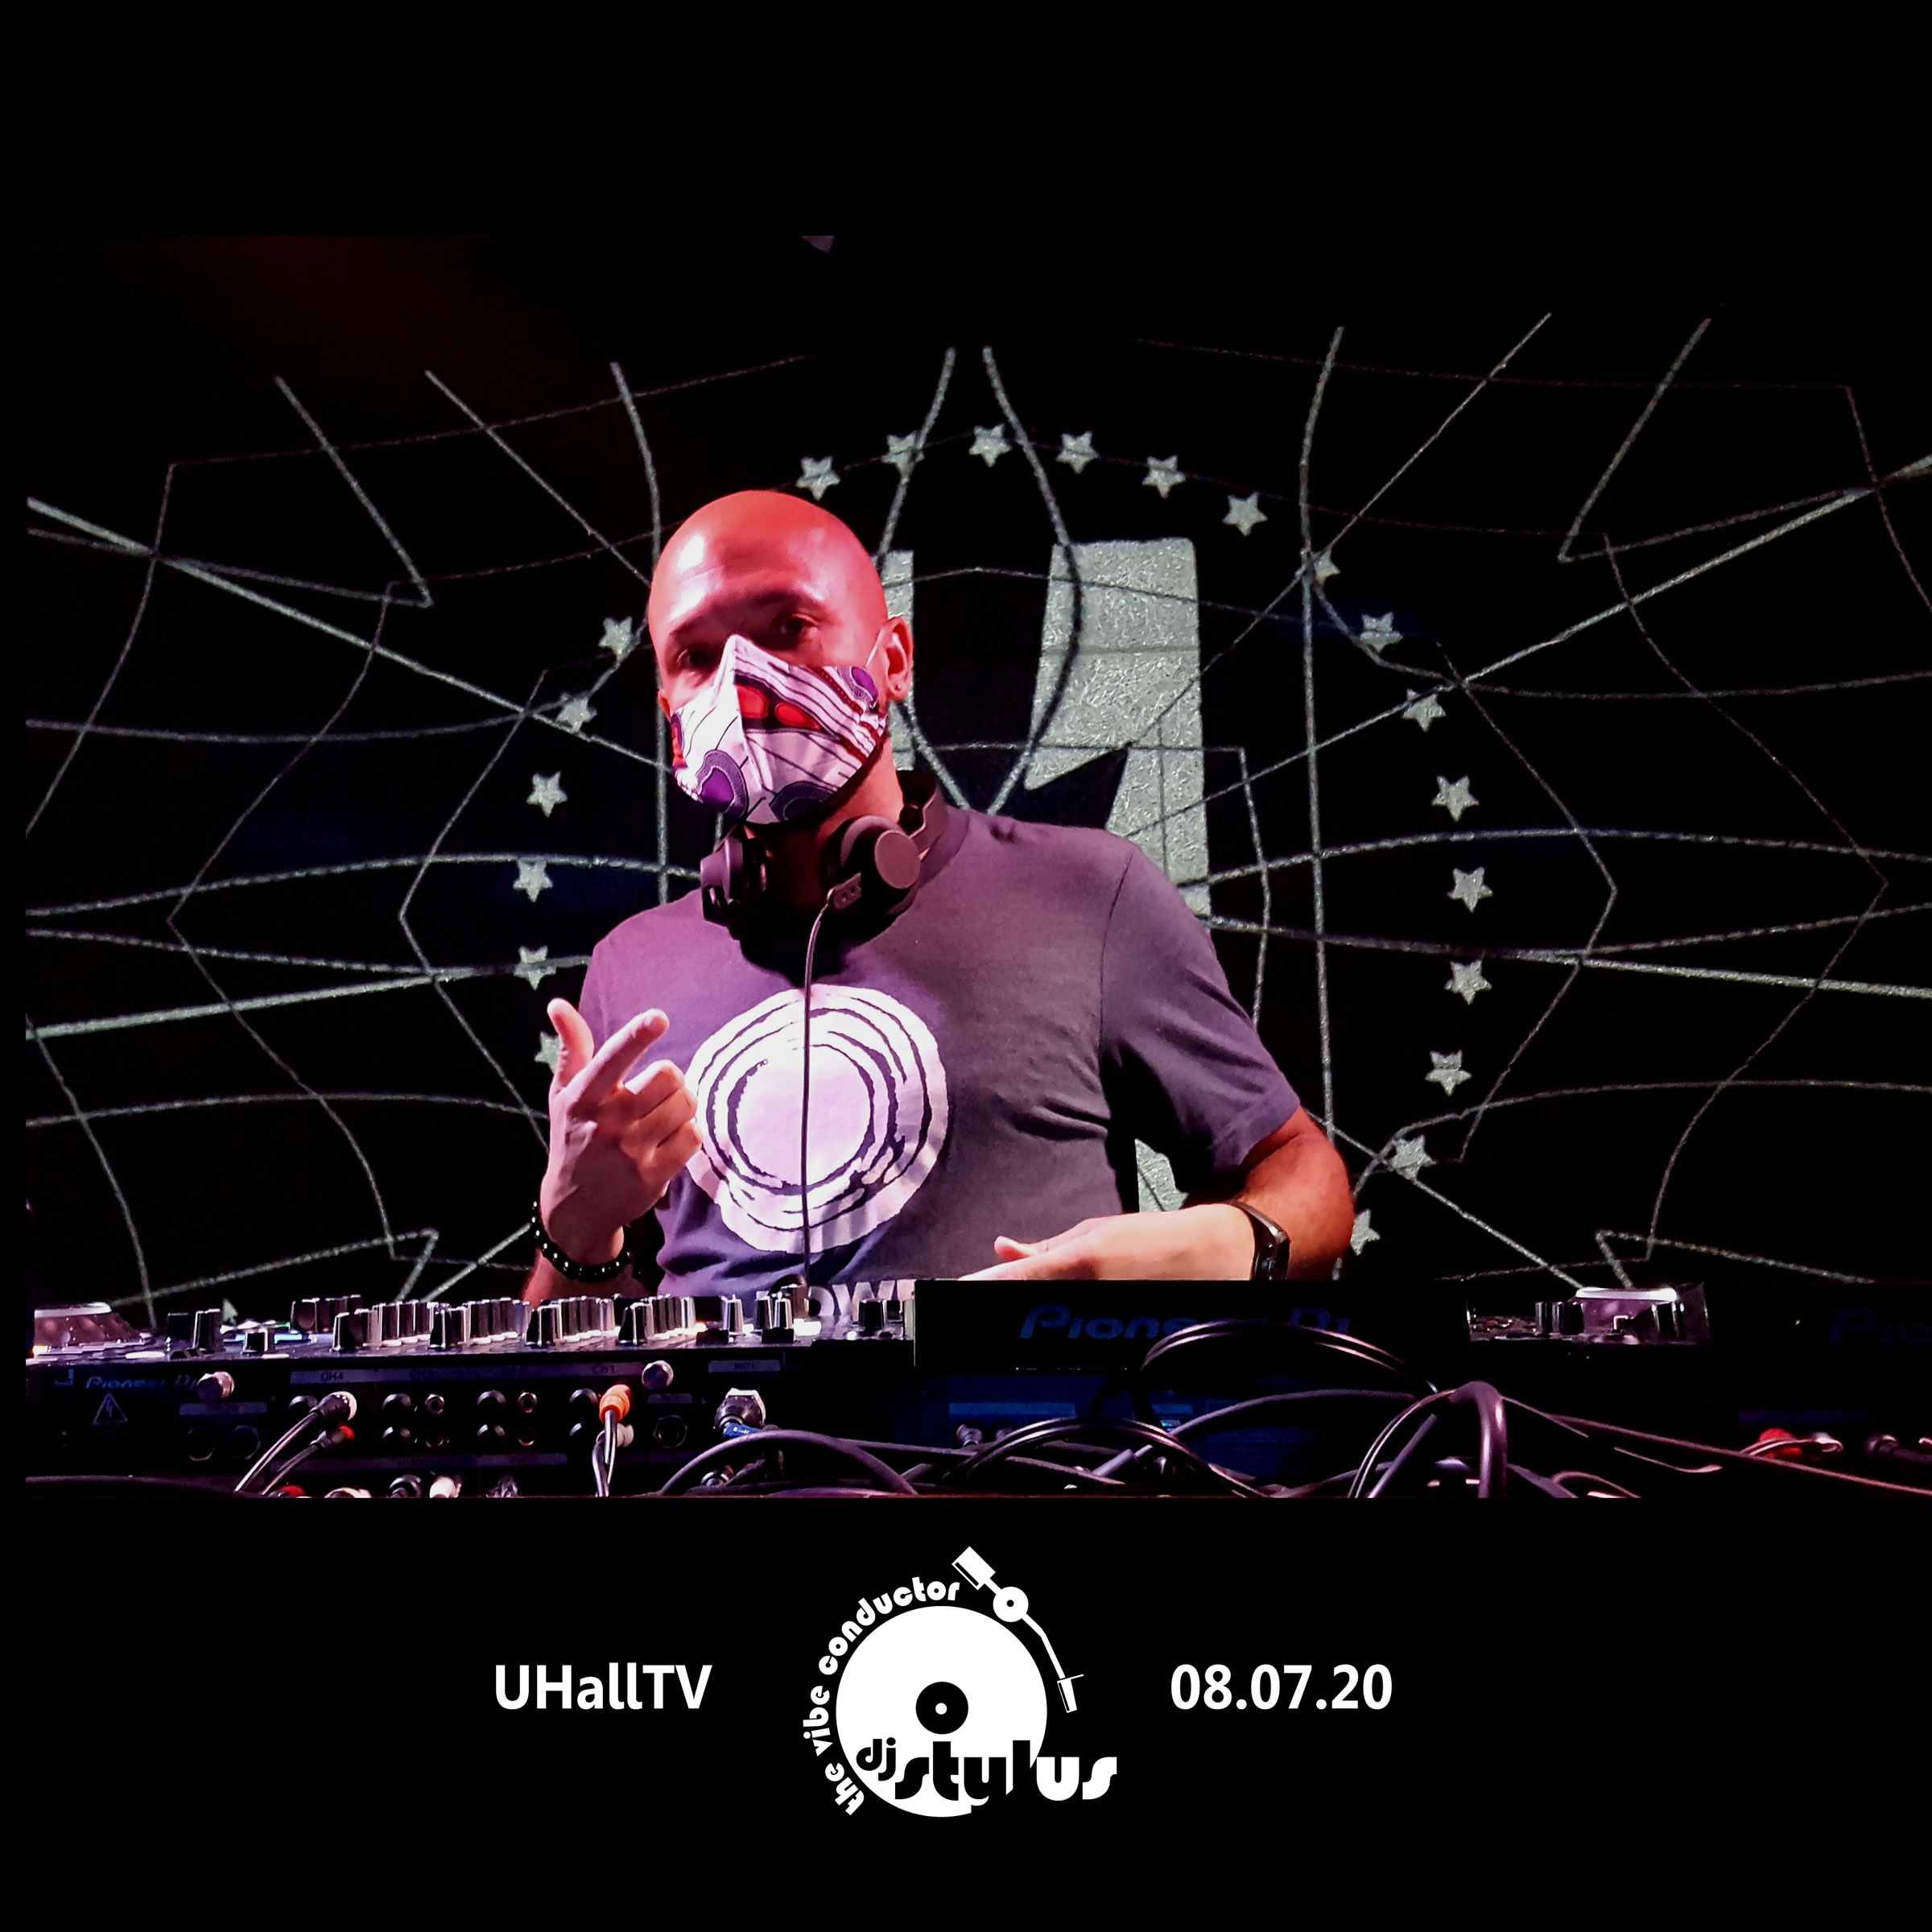 DJ Stylus - The Vibe Conductor at U Street Music Hall (UHallTV on Twitch)